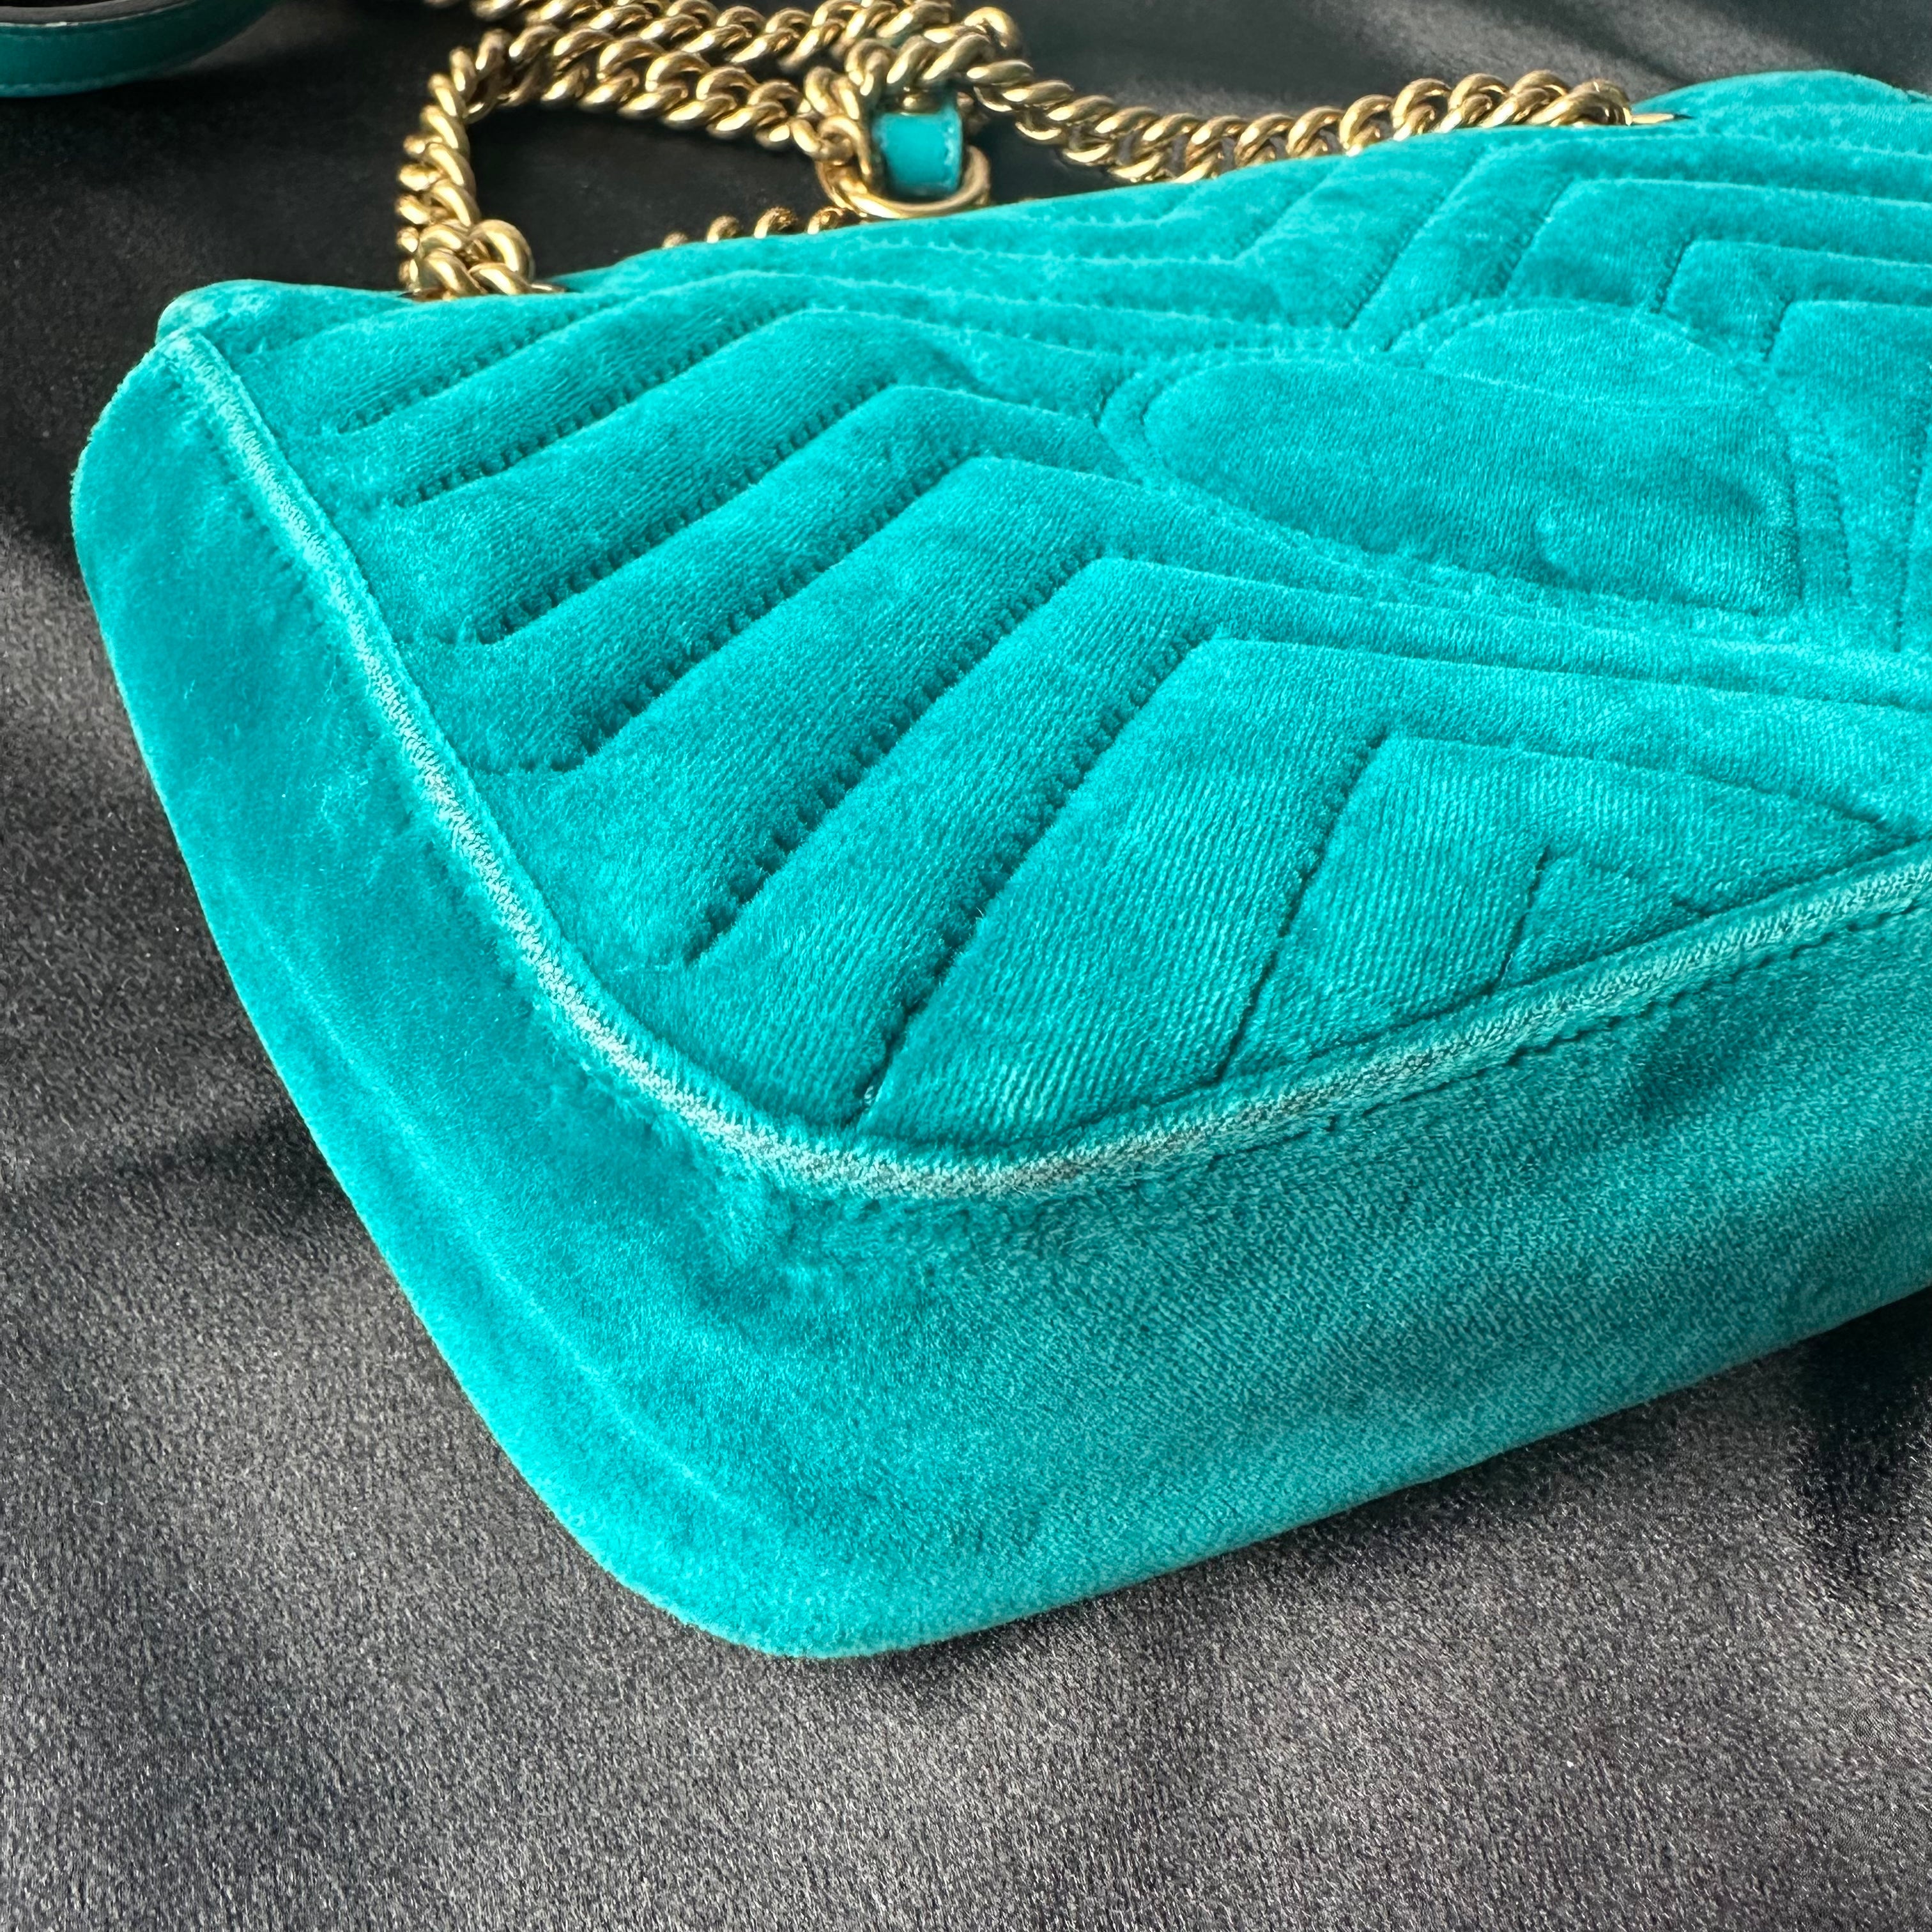 Gucci GG Marmont Small Velvet Shoulder Bag Turquoise 443497